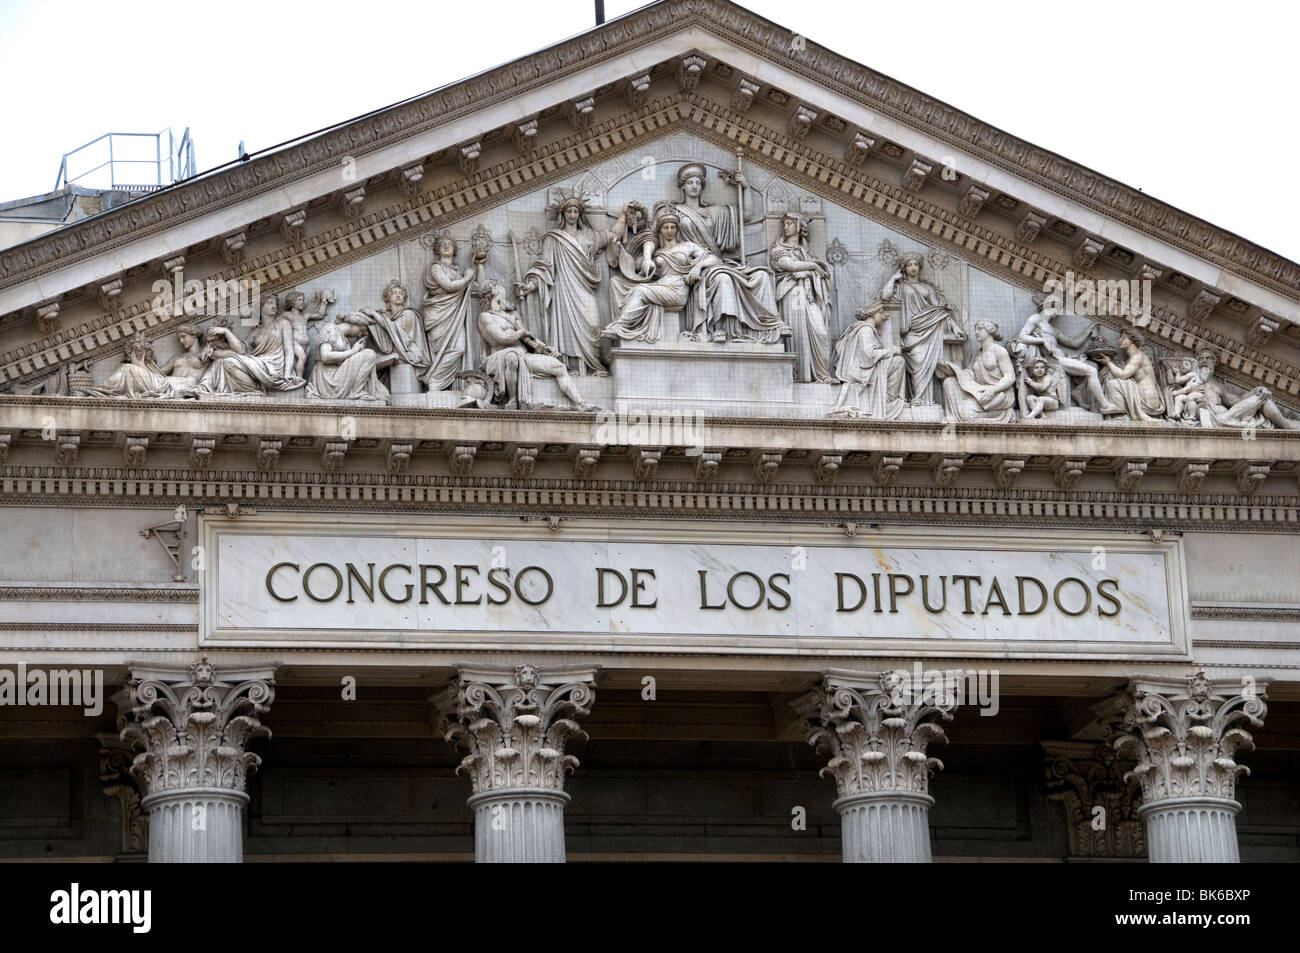 Madrid Spain Spanish Congreso de los Diputados Congress of Deputies Stock Photo